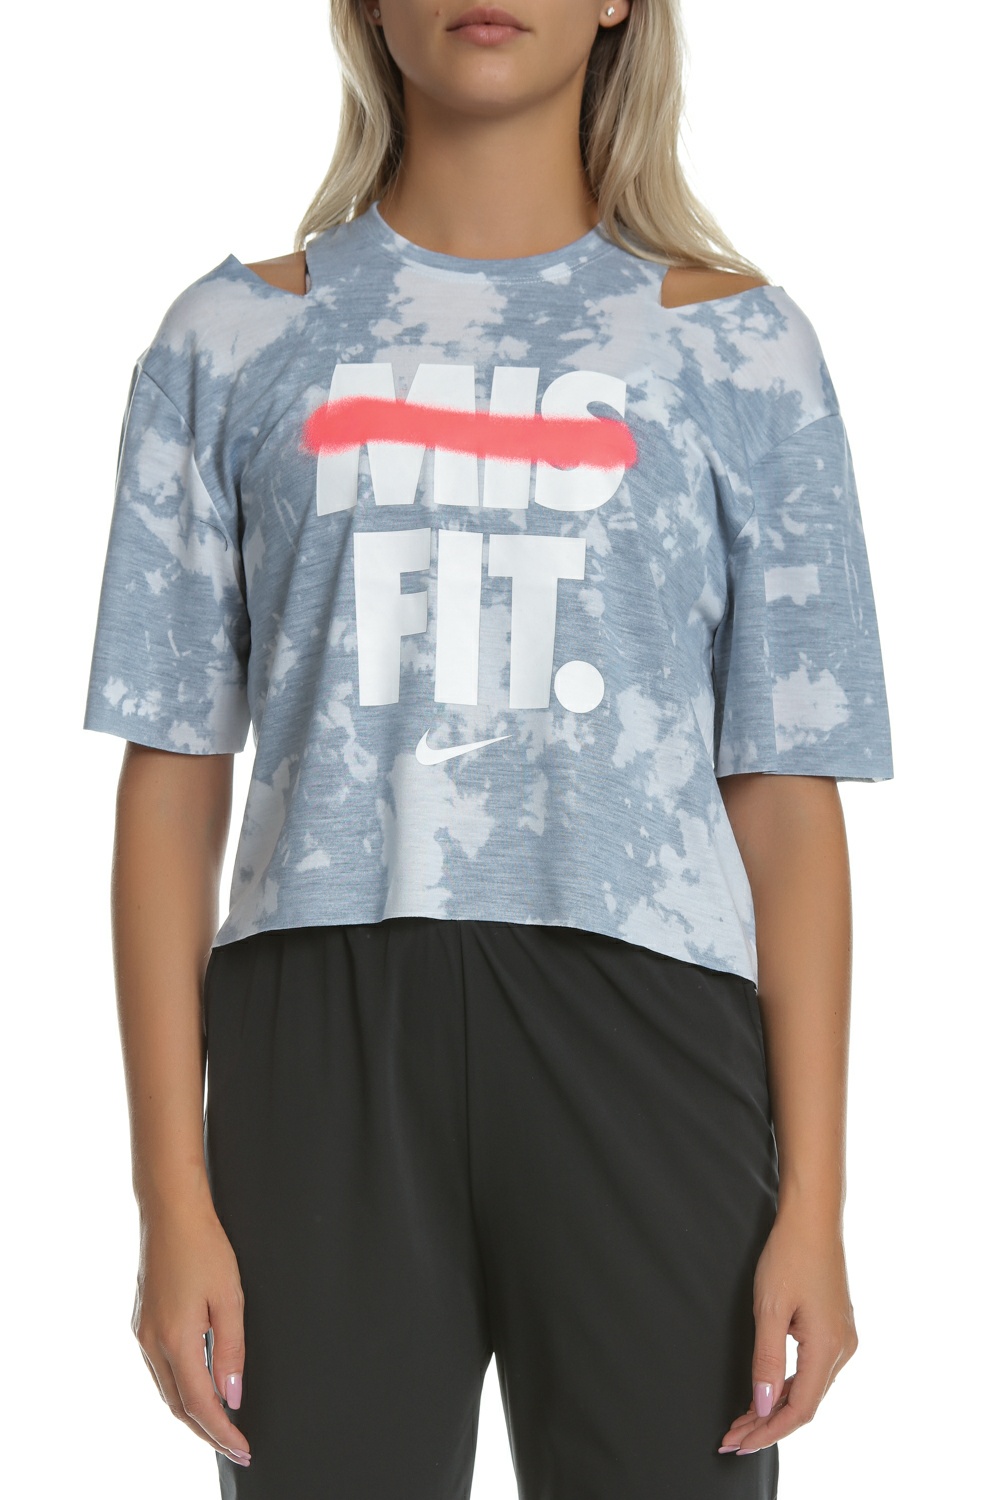 NIKE - Γυναικεία κοντομάνικη μπλούζα NIKE REBEL SS CROP TOP μπλε-γκρι Γυναικεία/Ρούχα/Αθλητικά/T-shirt-Τοπ